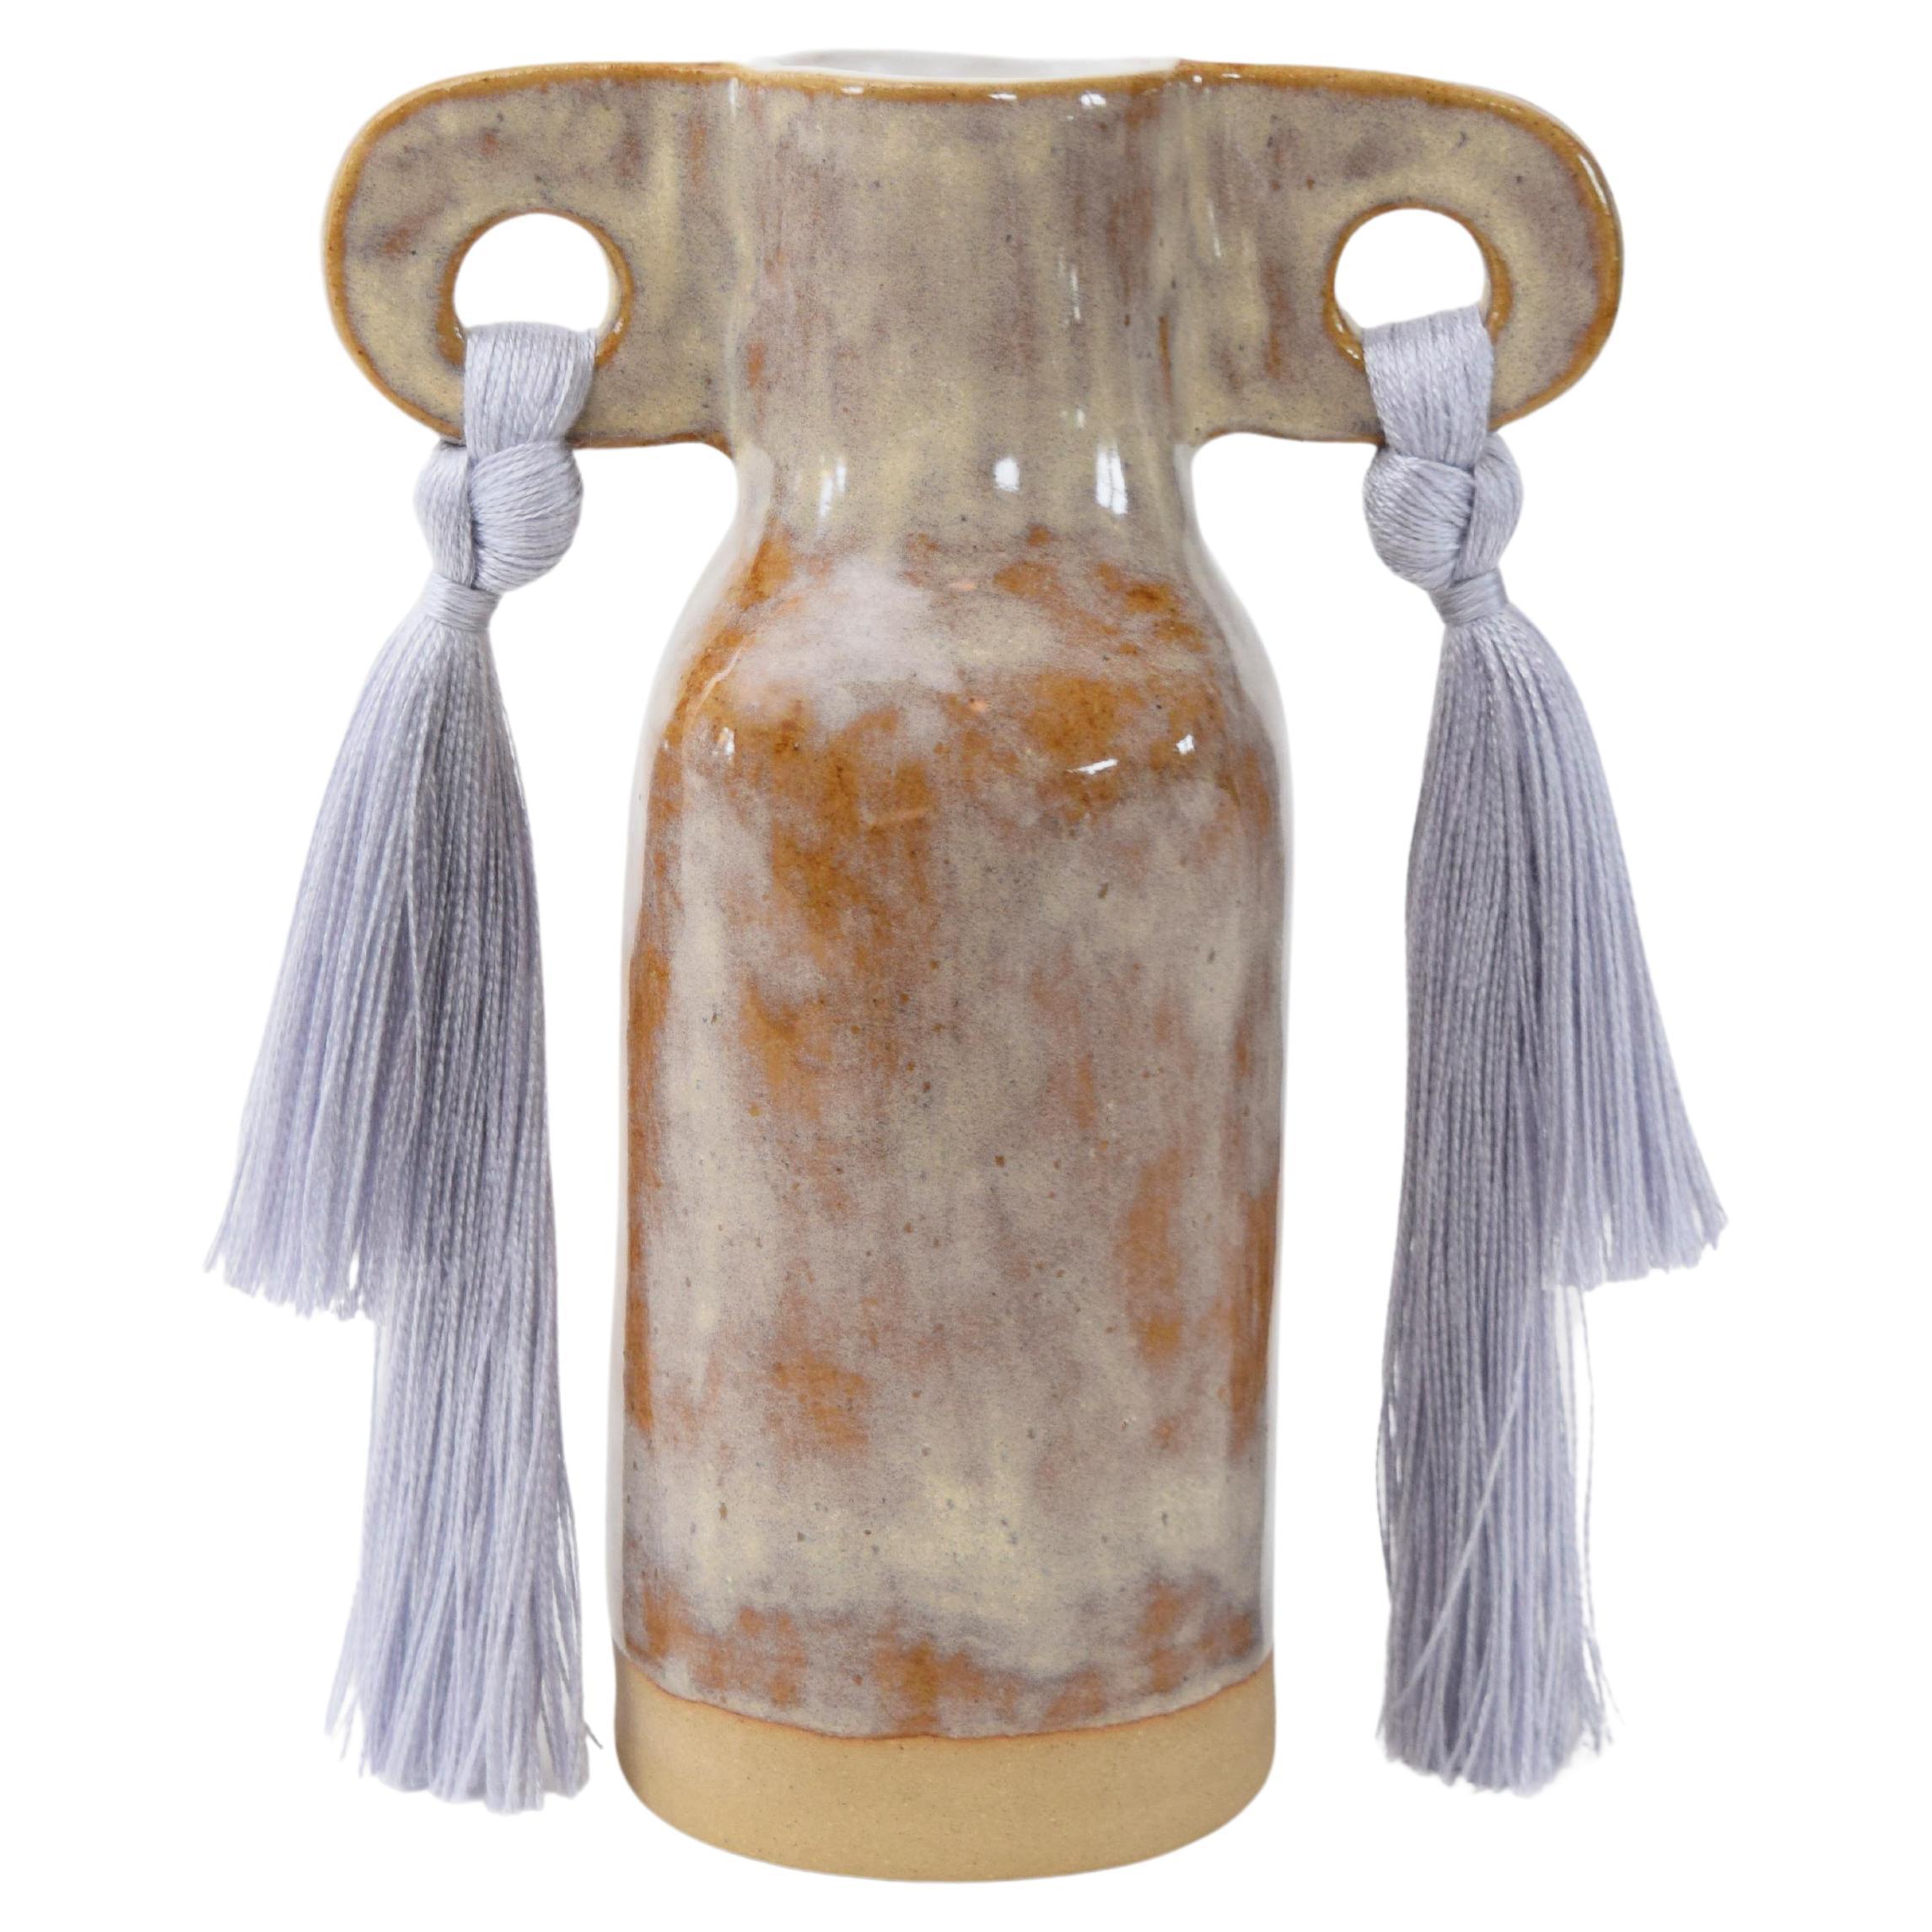 Handmade Ceramic Vase #606 in Gray Glaze with Tencel Fringe Details